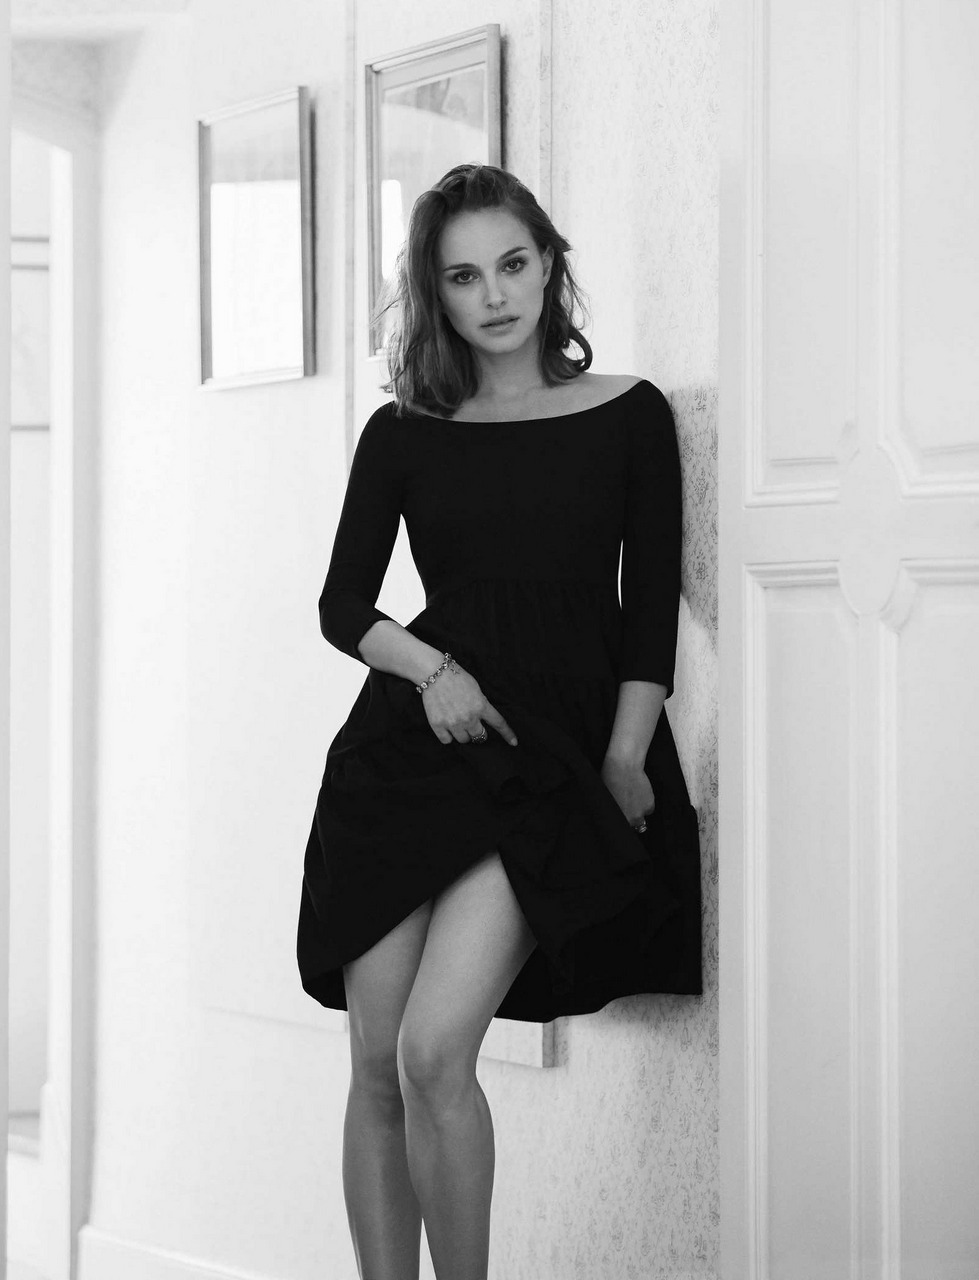 Natalie Portman Hot